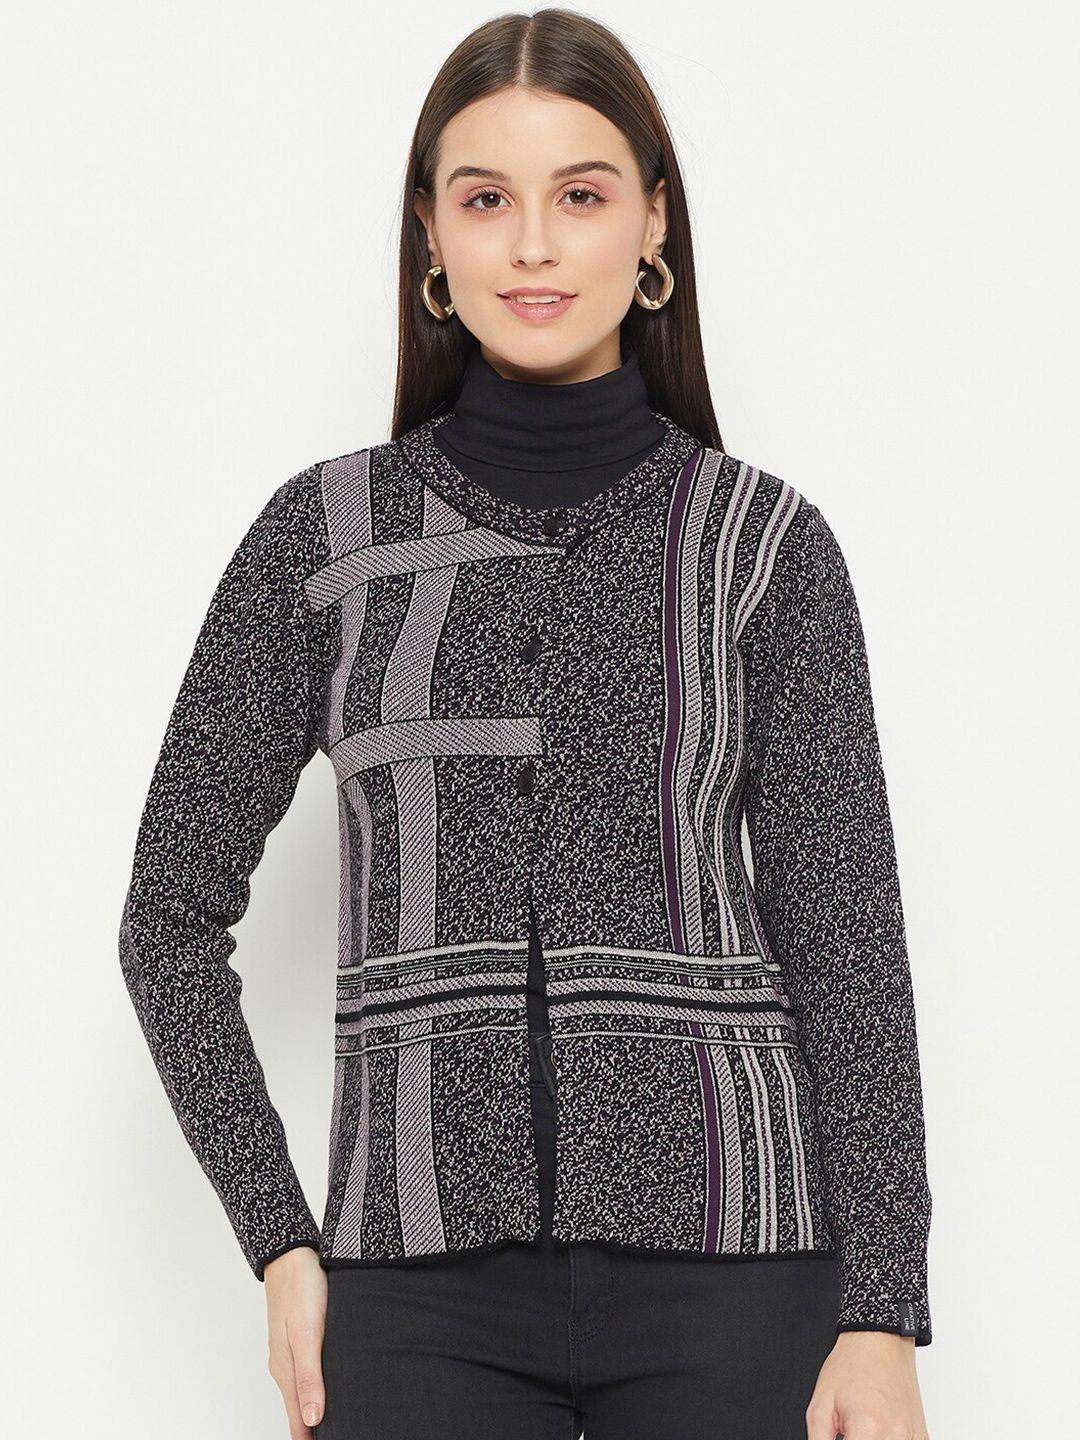 creative line geometric printed woolen cardigan sweater